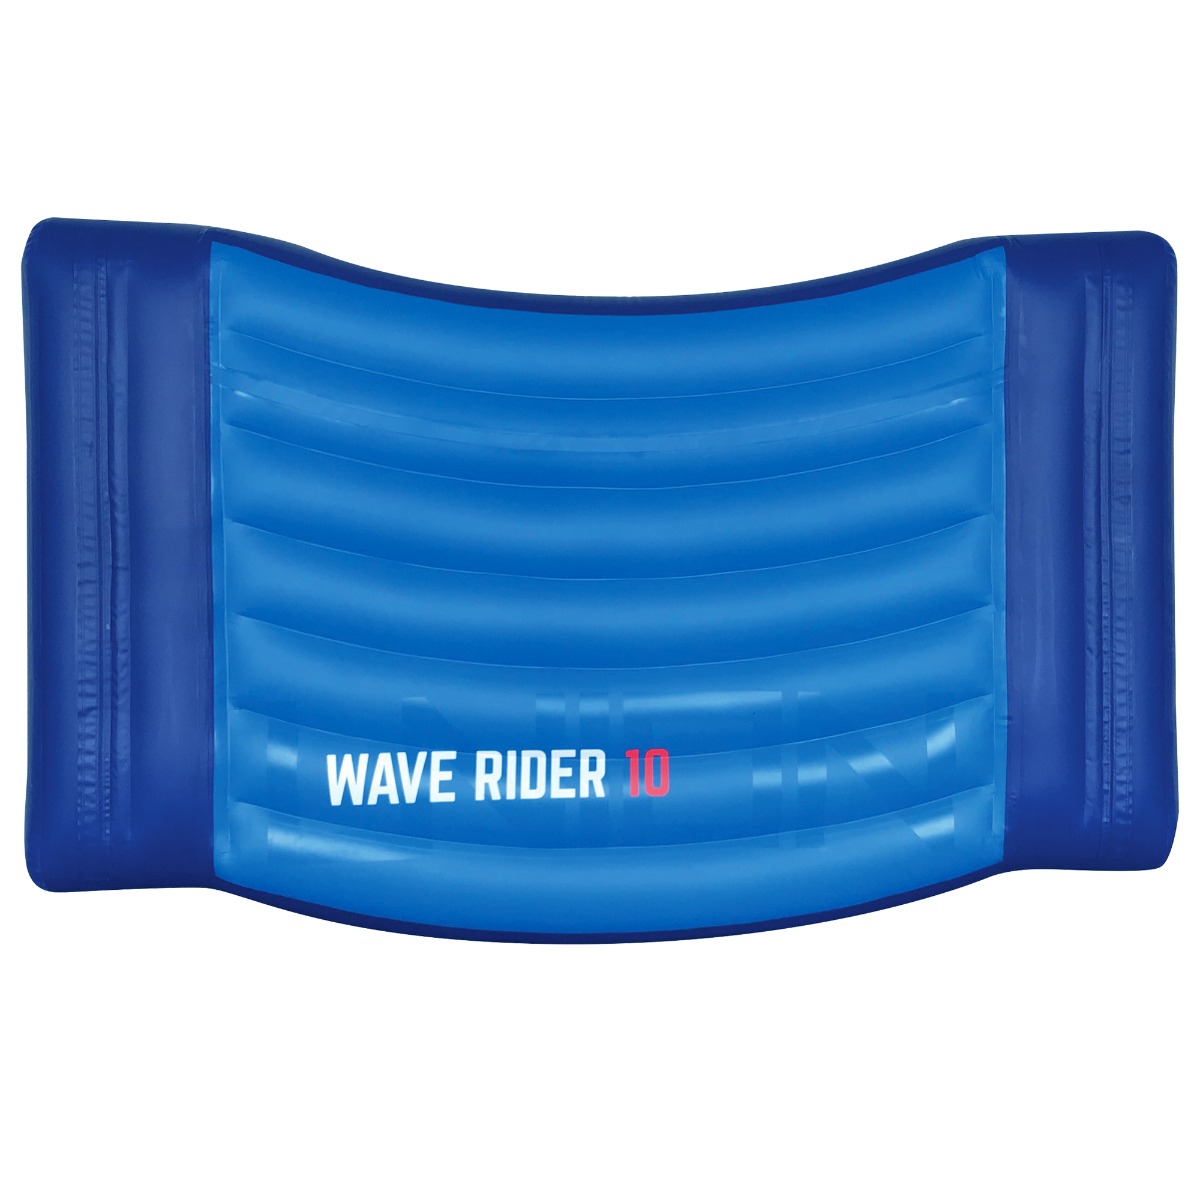 User Manual: Union Aquaparks Wave Rider 10